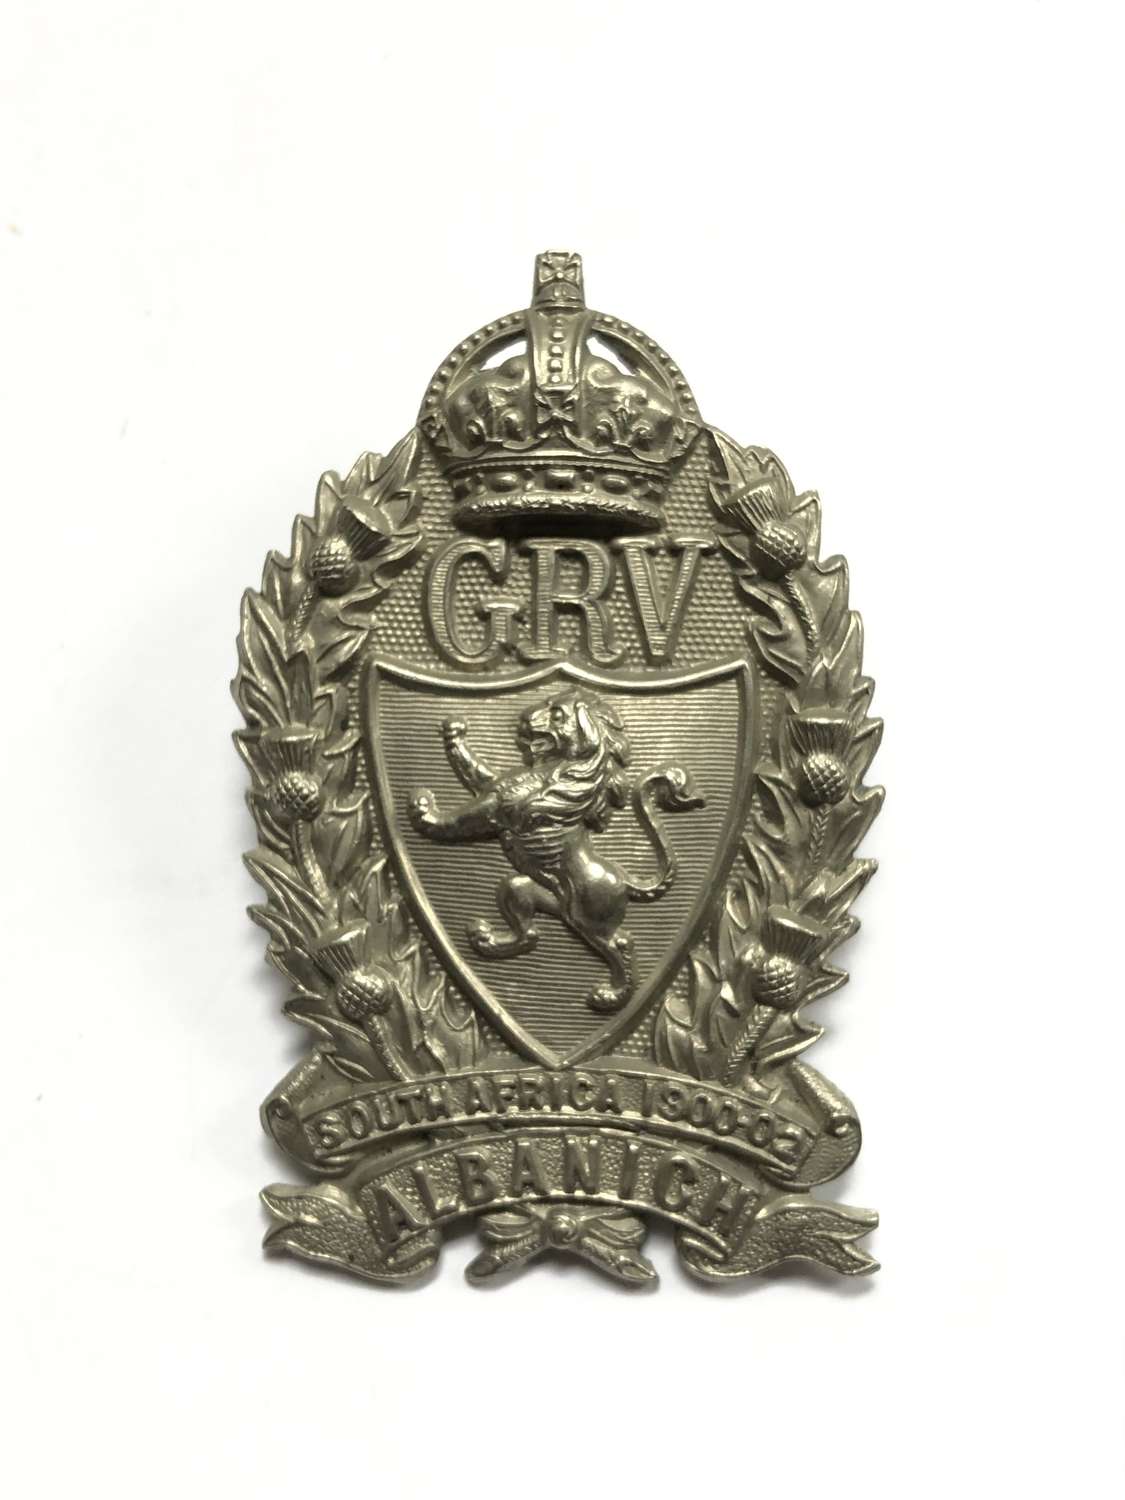 Galloway Rifle Volunteers glengarry badge circa 1905-08